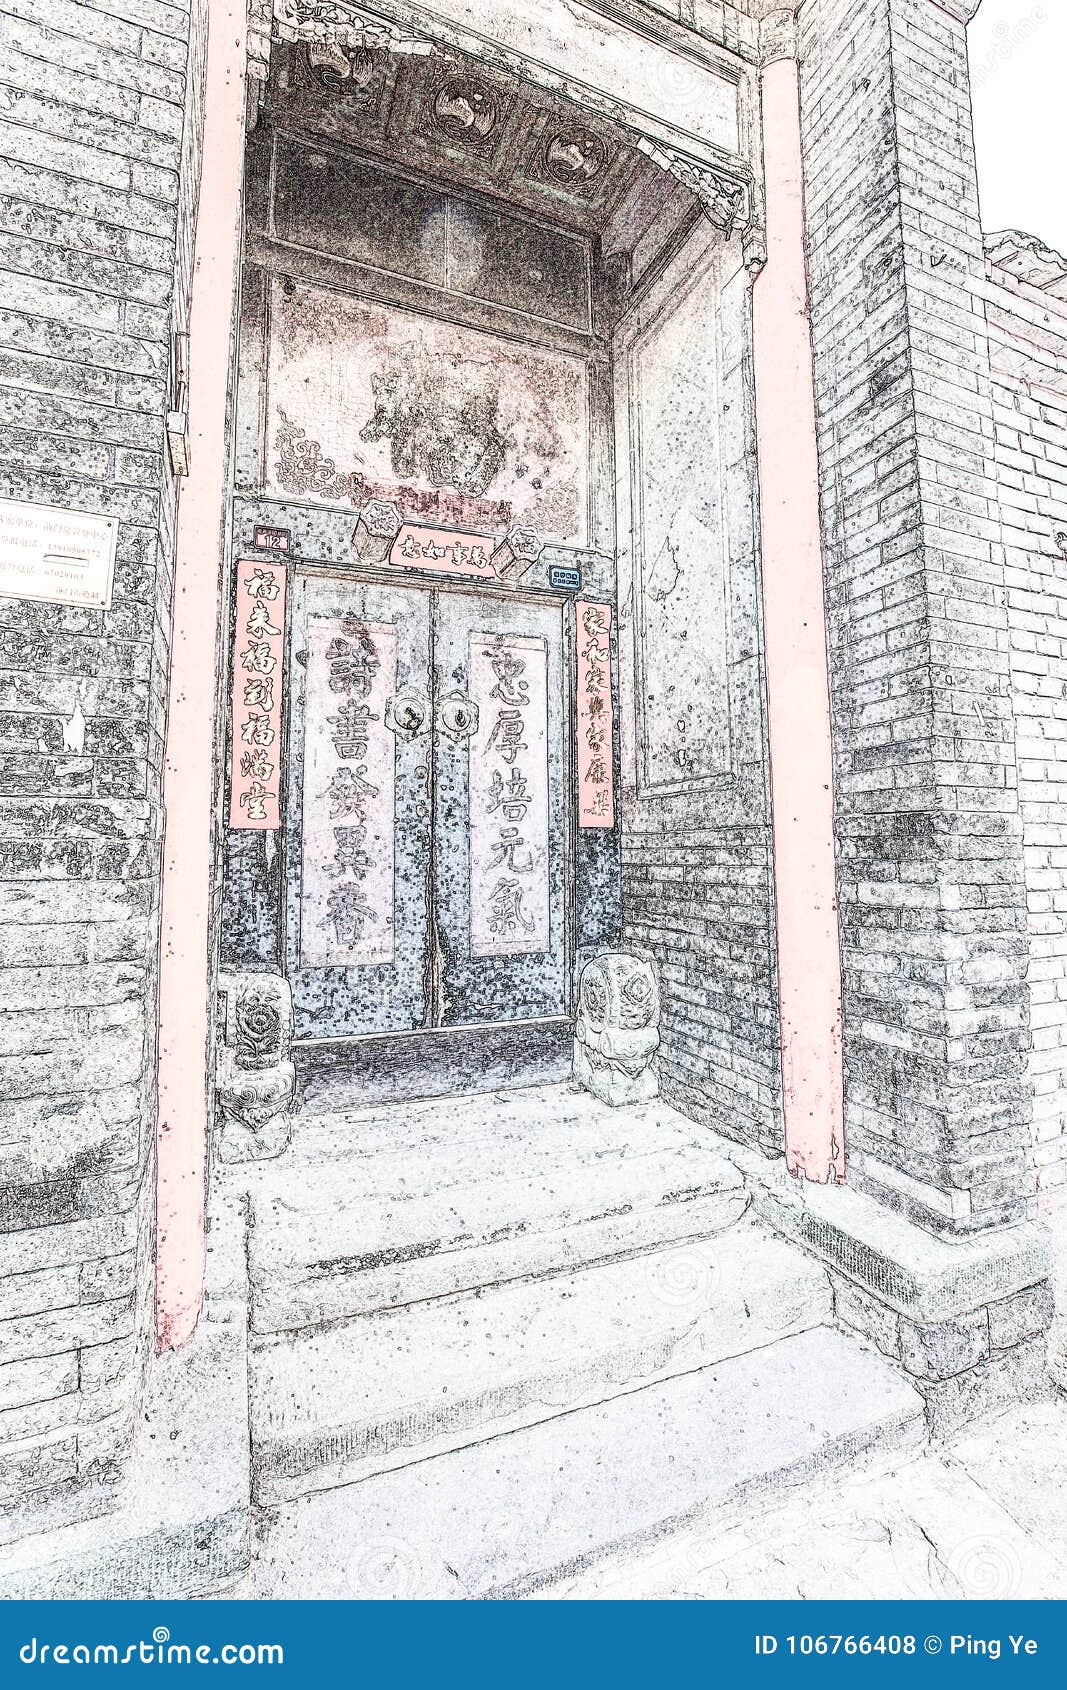 gatepost couplet in beijing